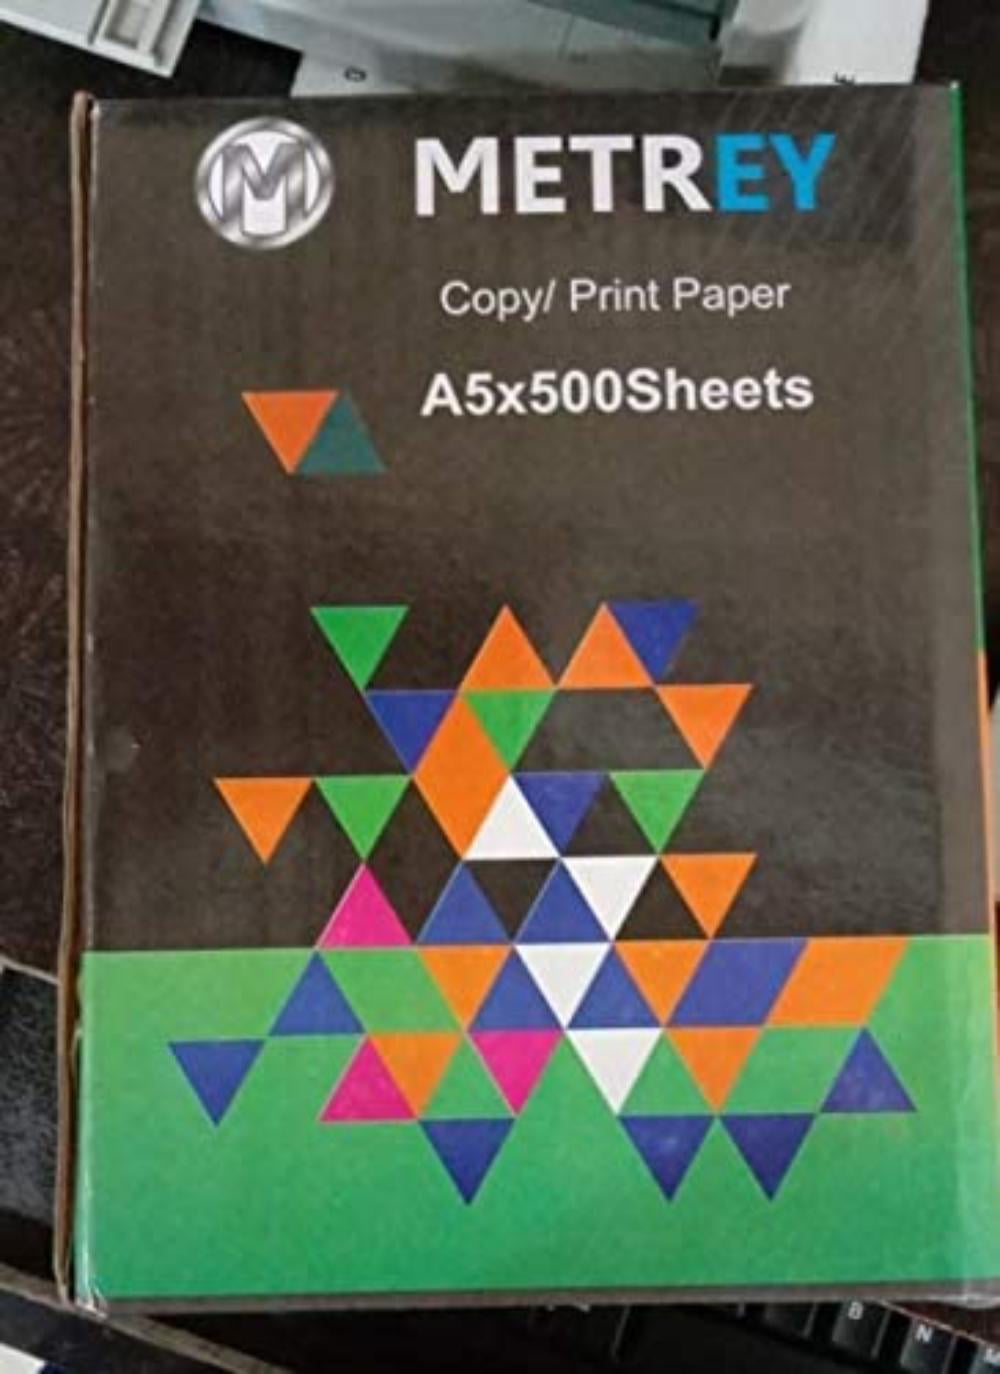 A5 White Printer Copy Paper 80gsm Quality Sheets Ream Copier Multi Purpose 